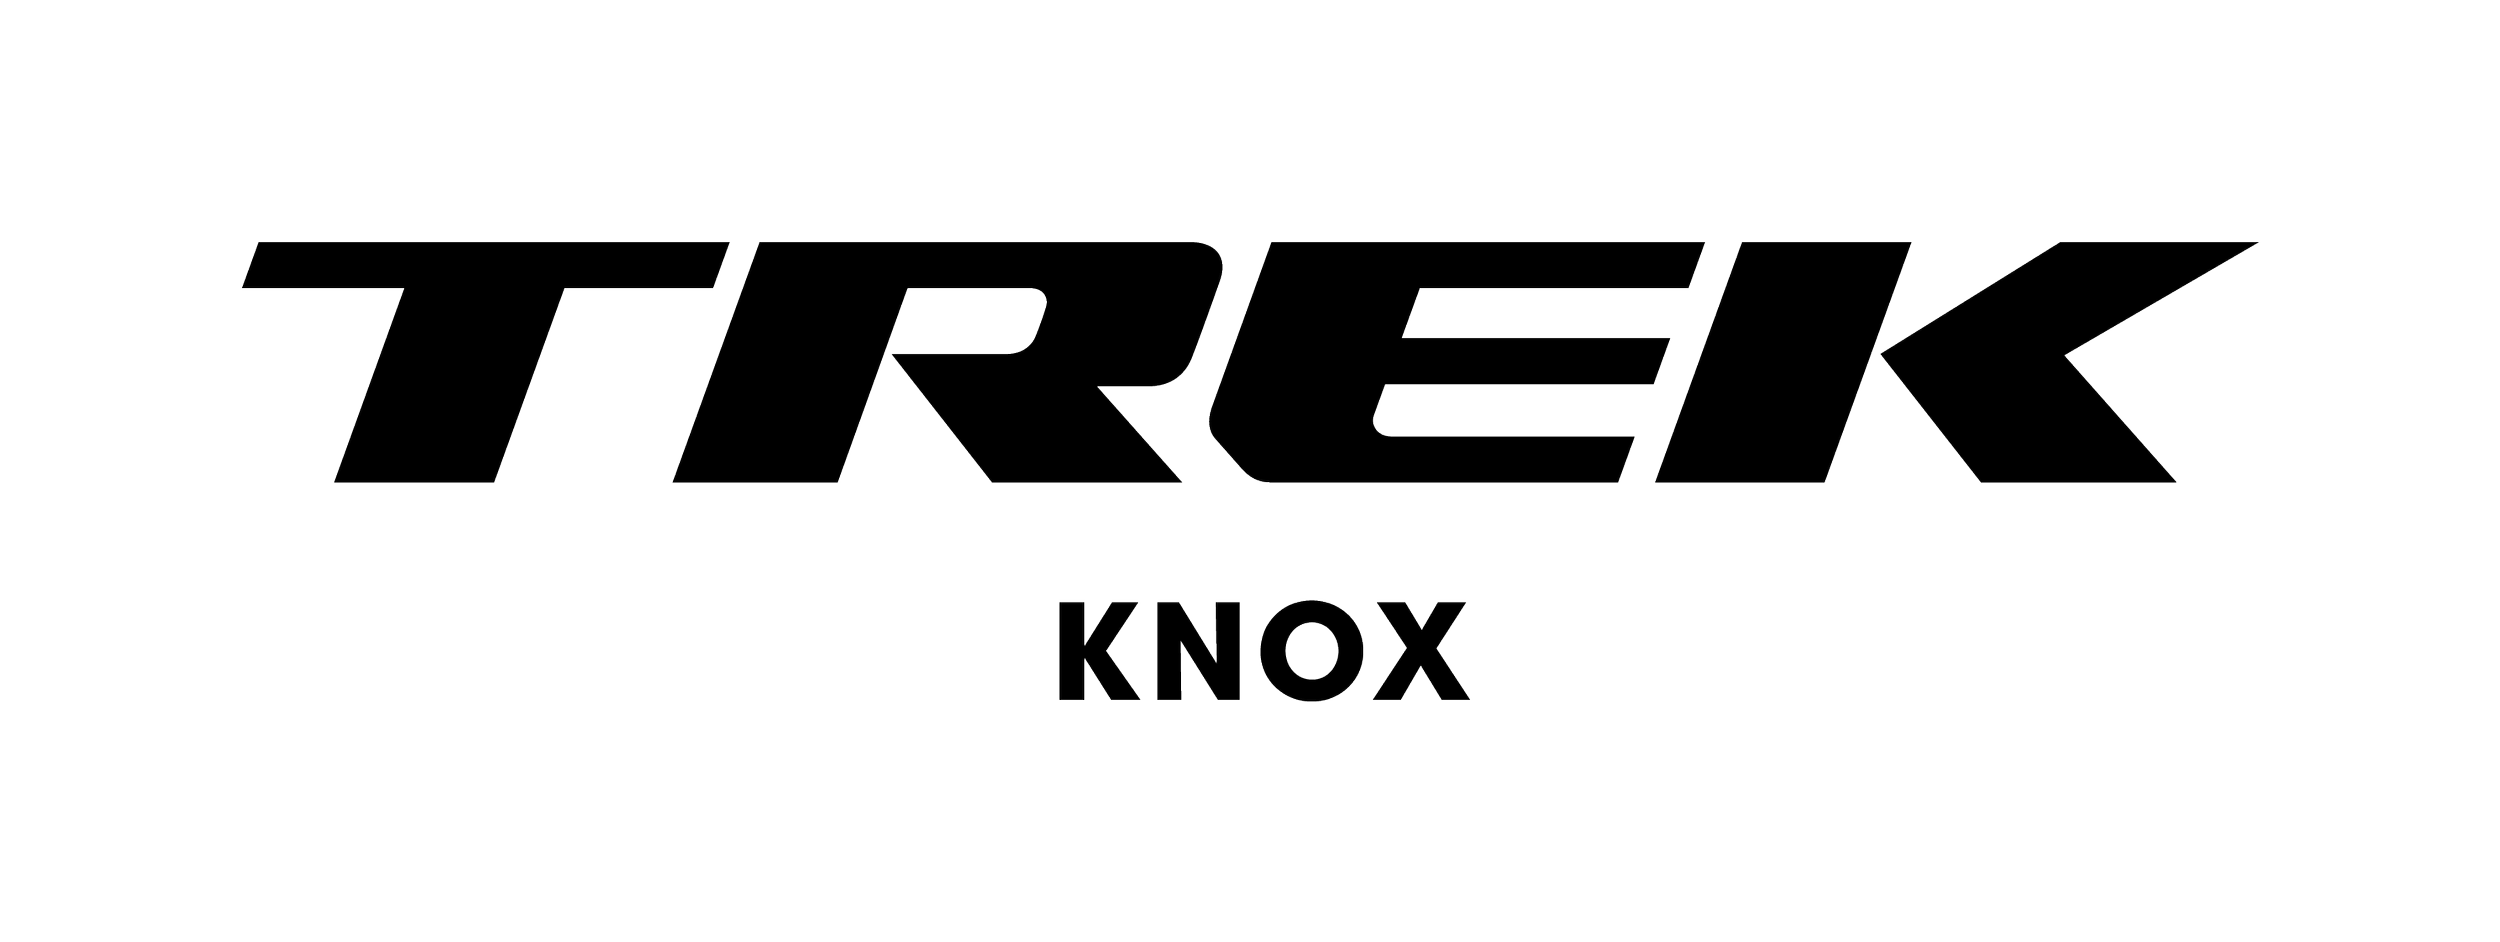 2018_Trek_logo_location_Knox_black.png